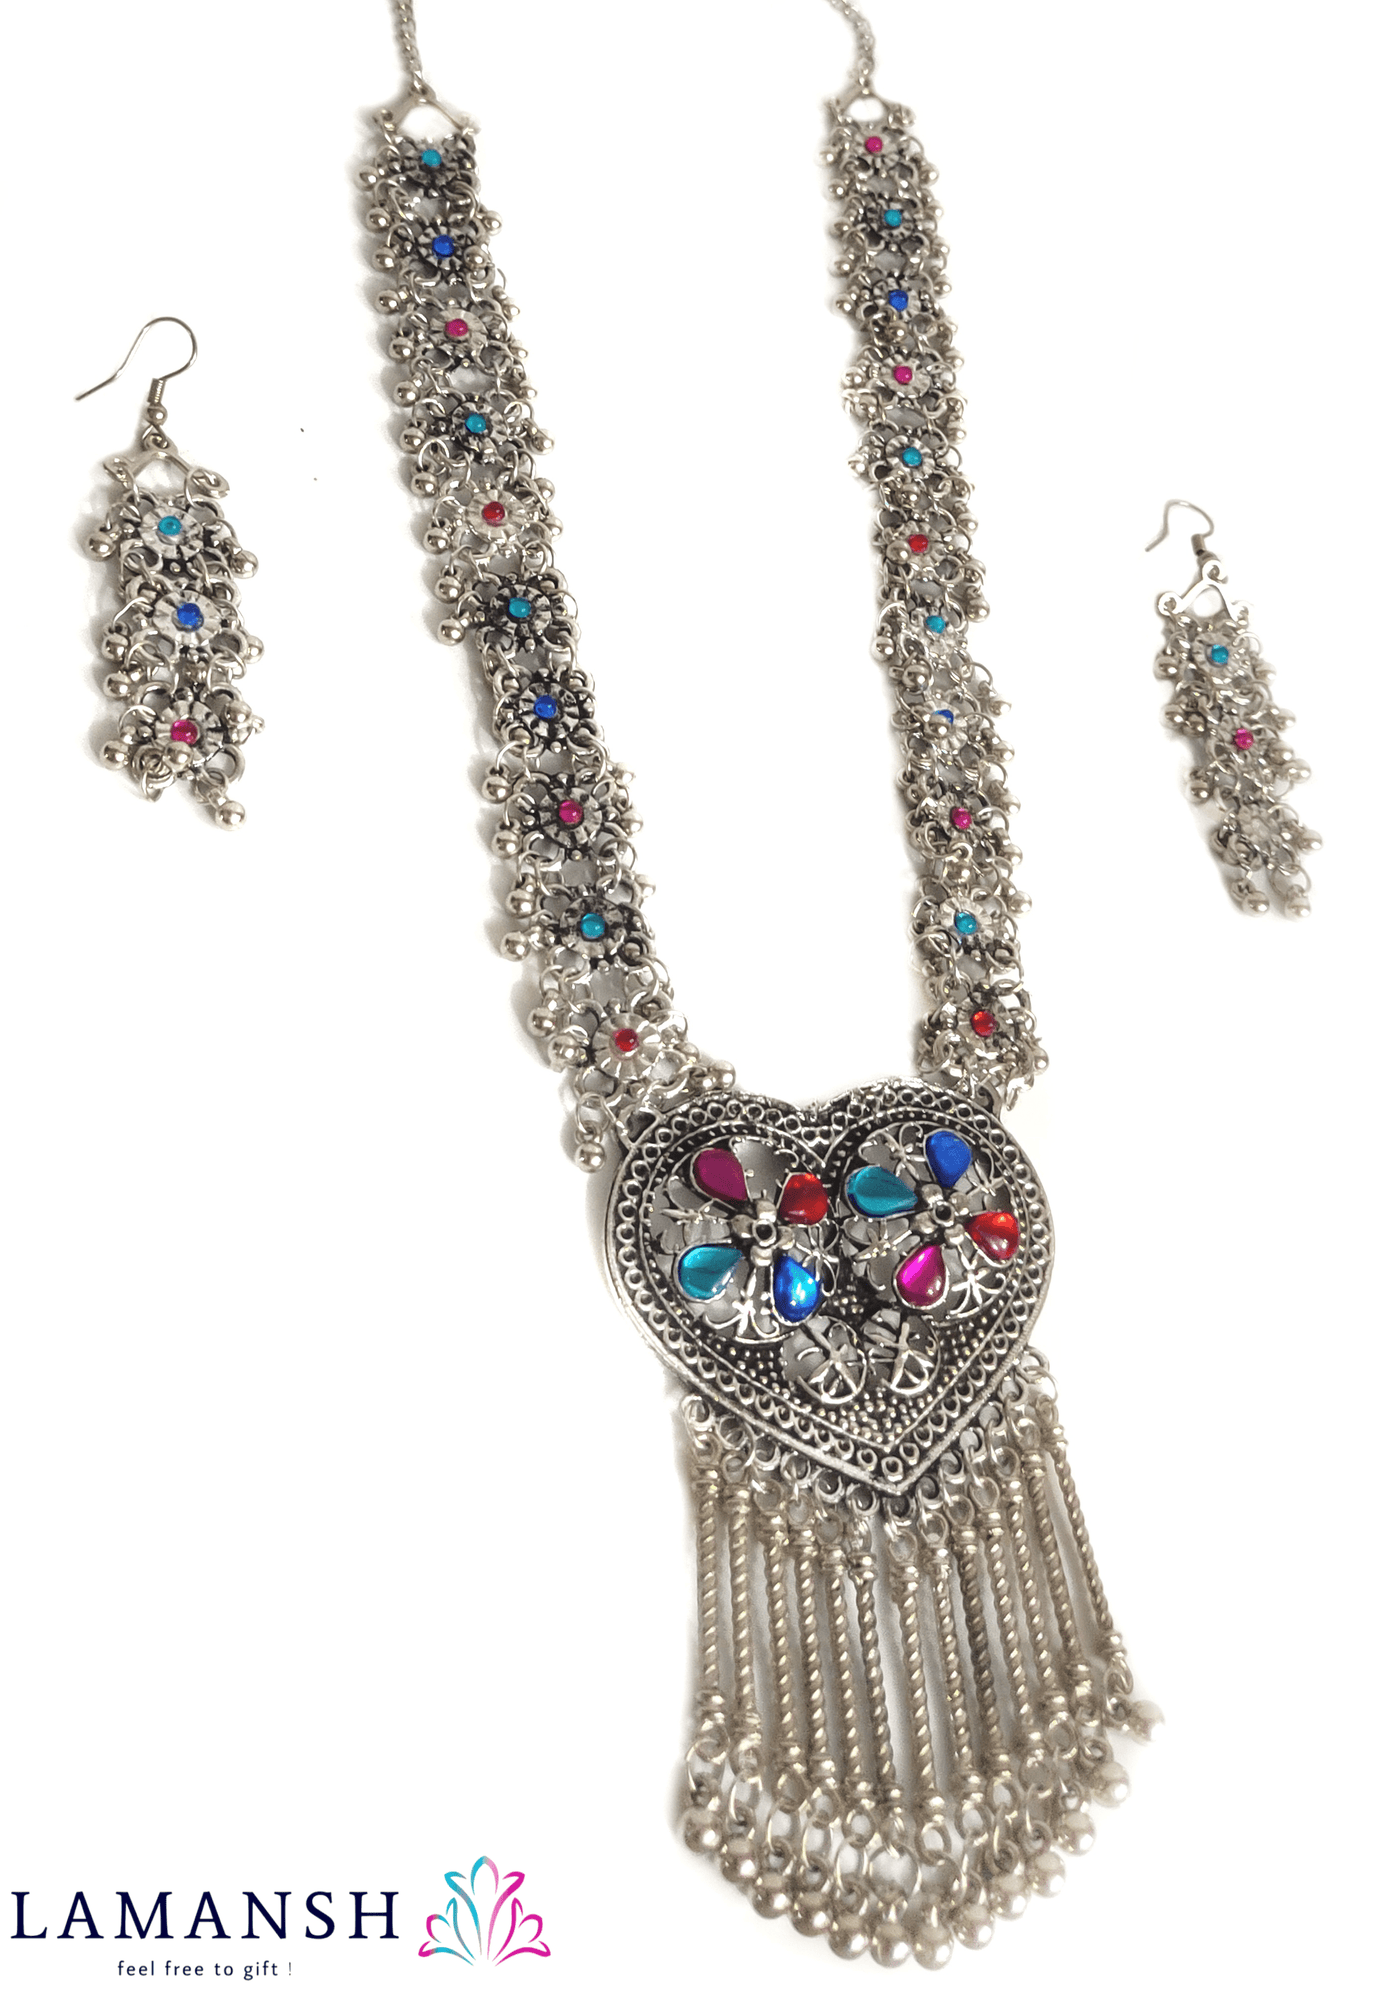 Lamansh Necklace & Earrings Set Silver / Silver Oxidised Lamansh Silver Oxidized Jewellery Set